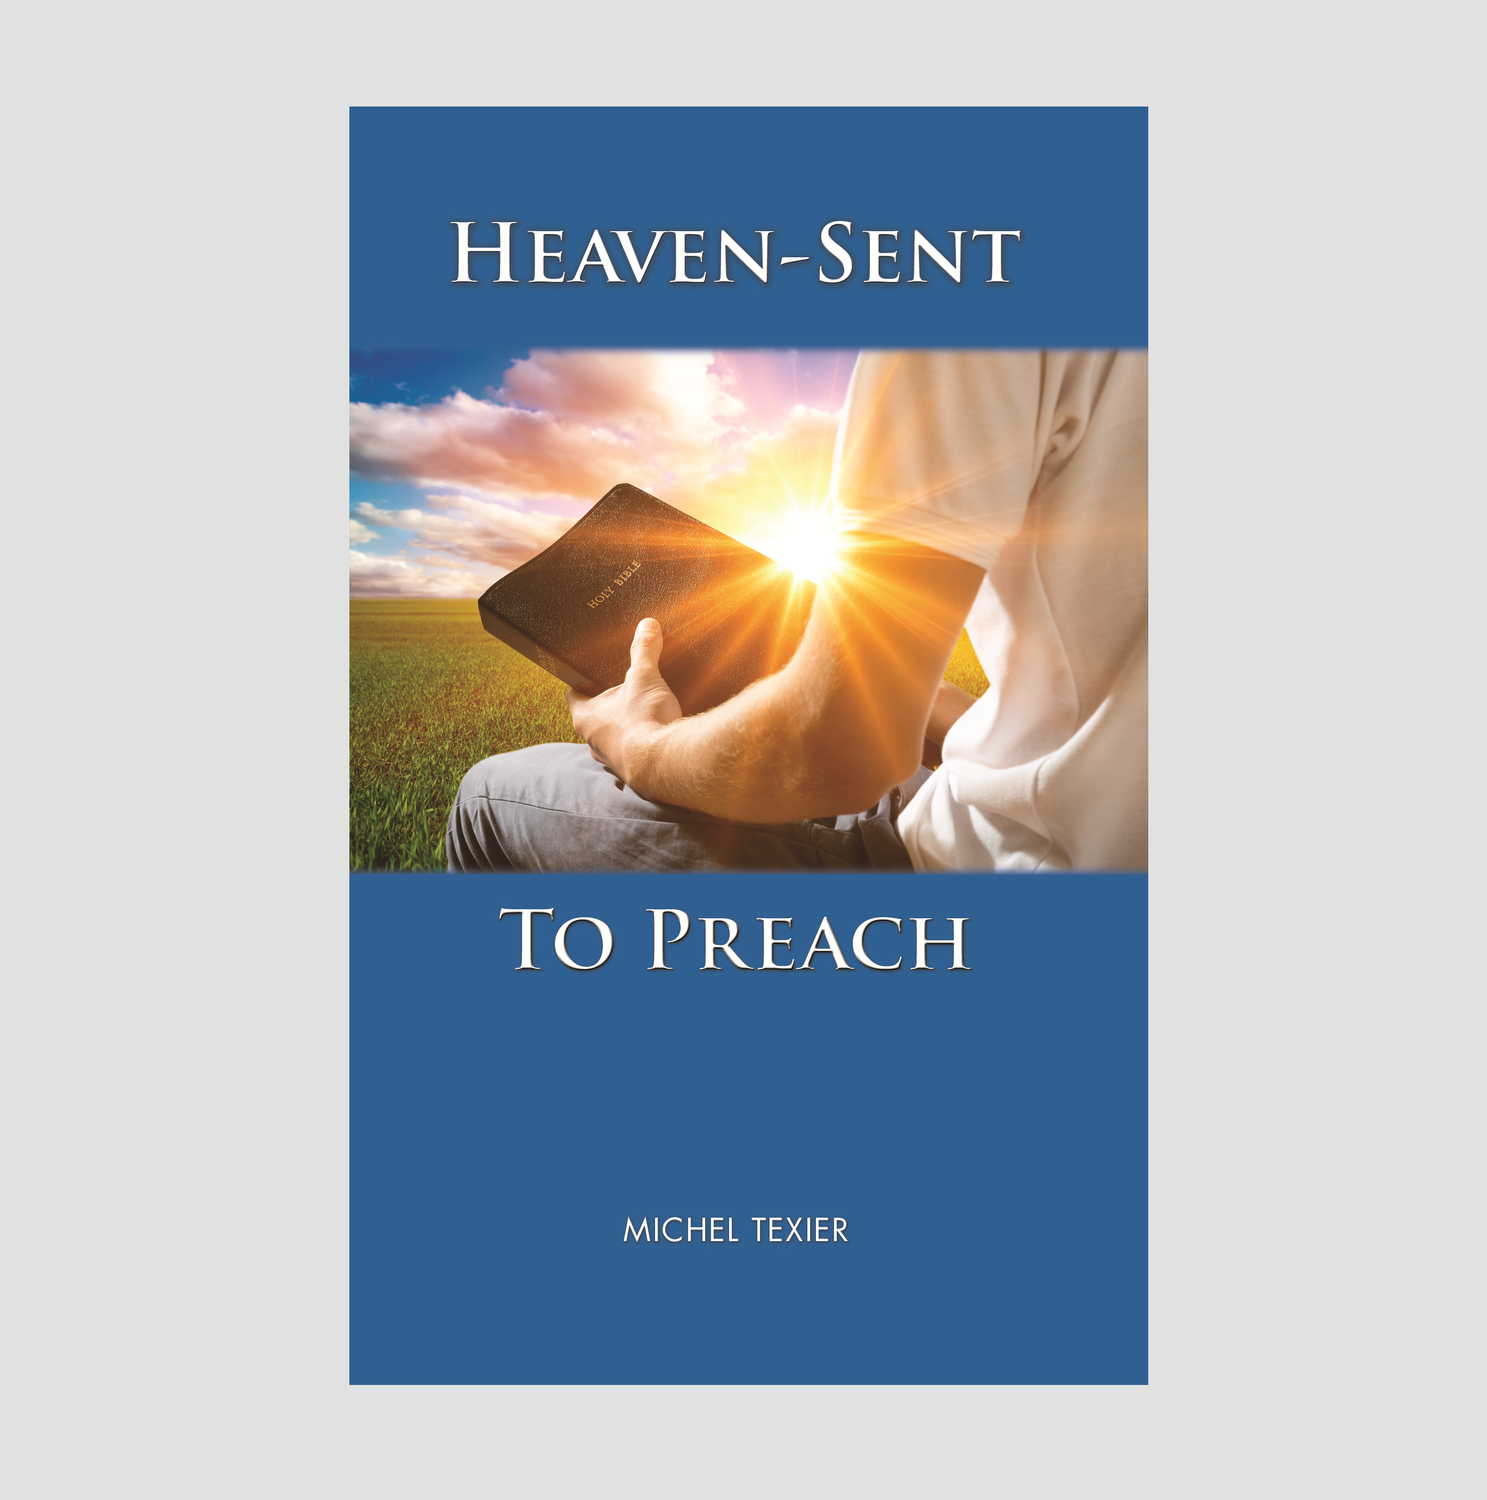 Heaven-Sent to Preach